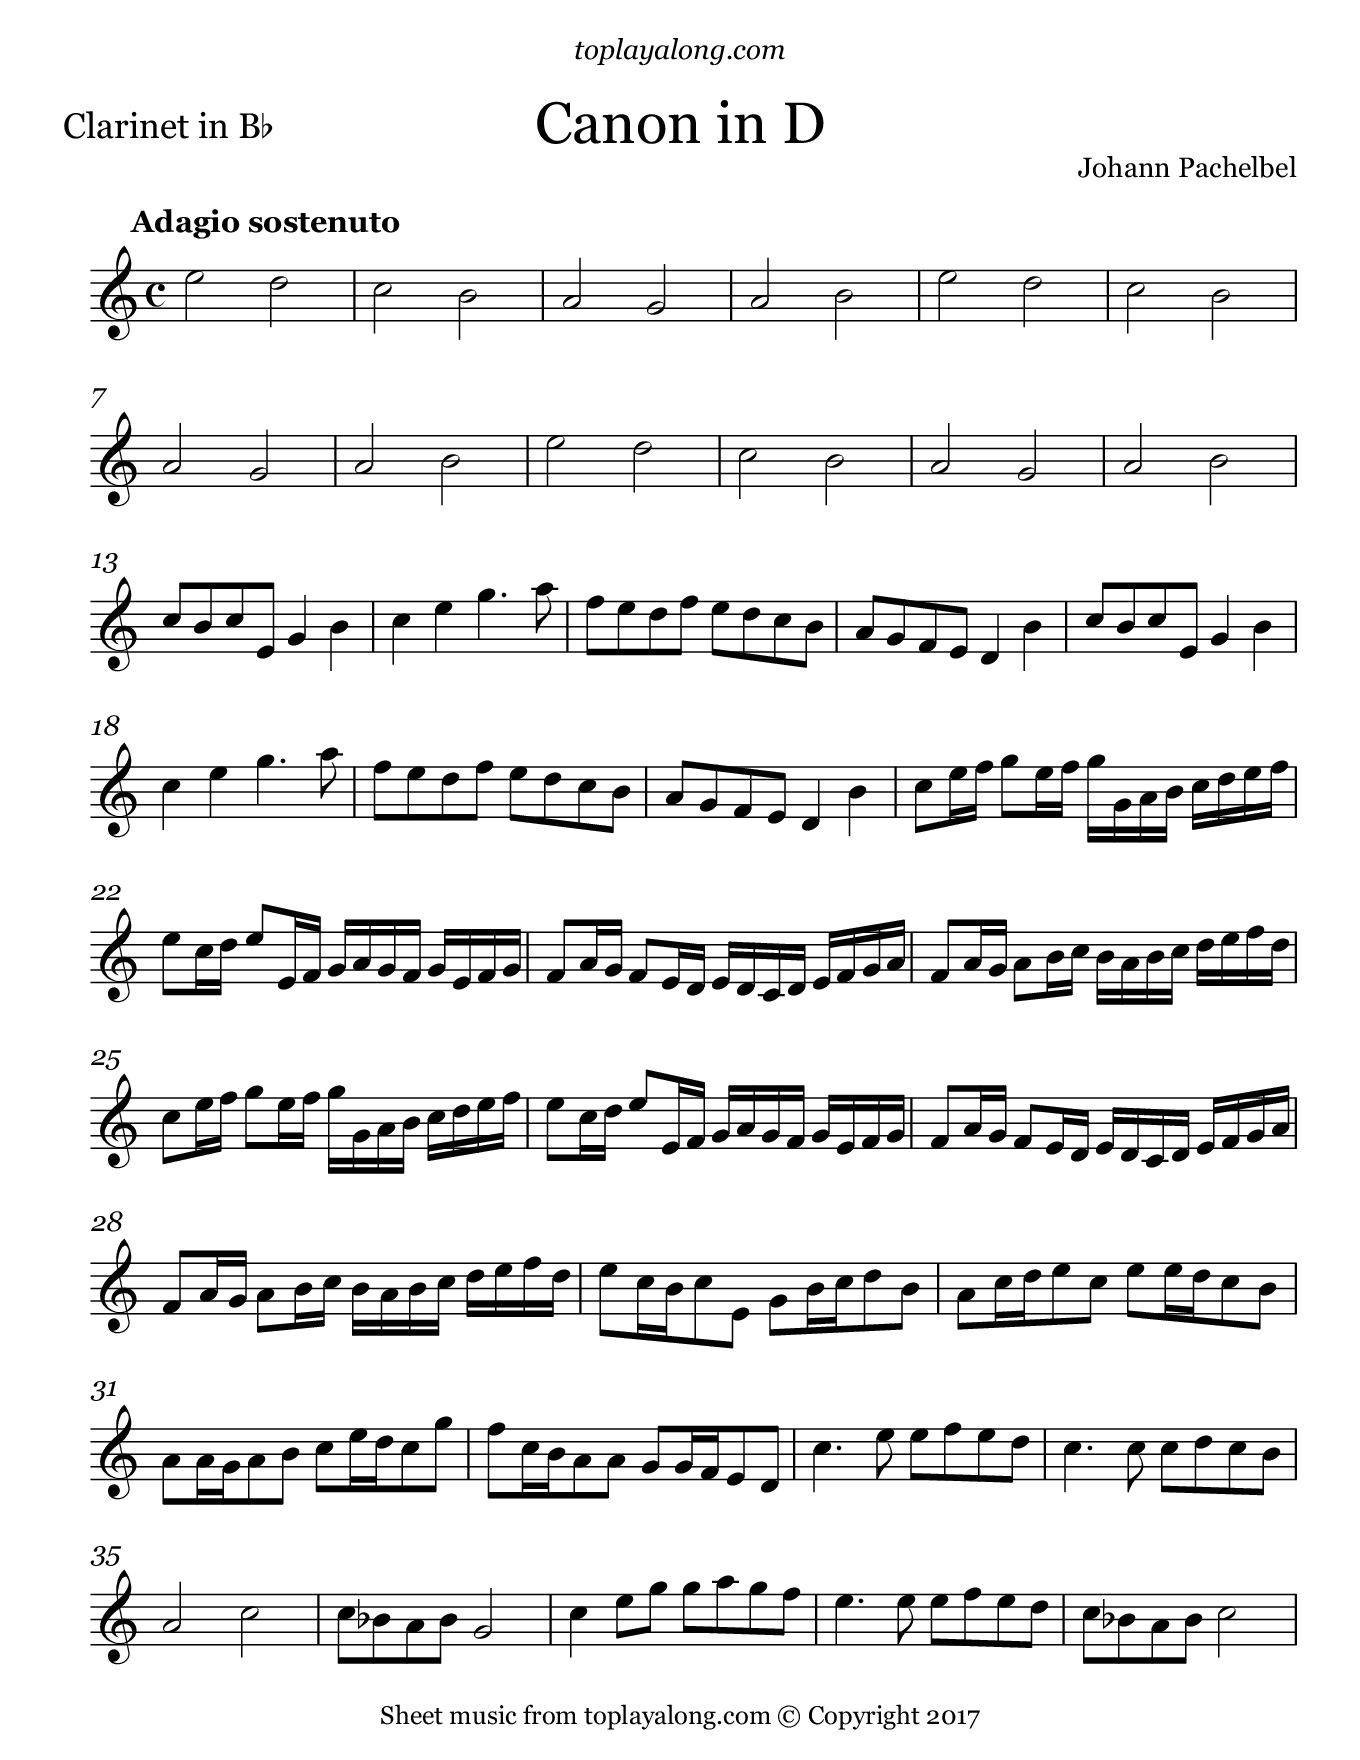 Pachelbel - Canon In D | Cleranet | Pinterest | Clarinet Sheet Music - Free Printable Clarinet Sheet Music